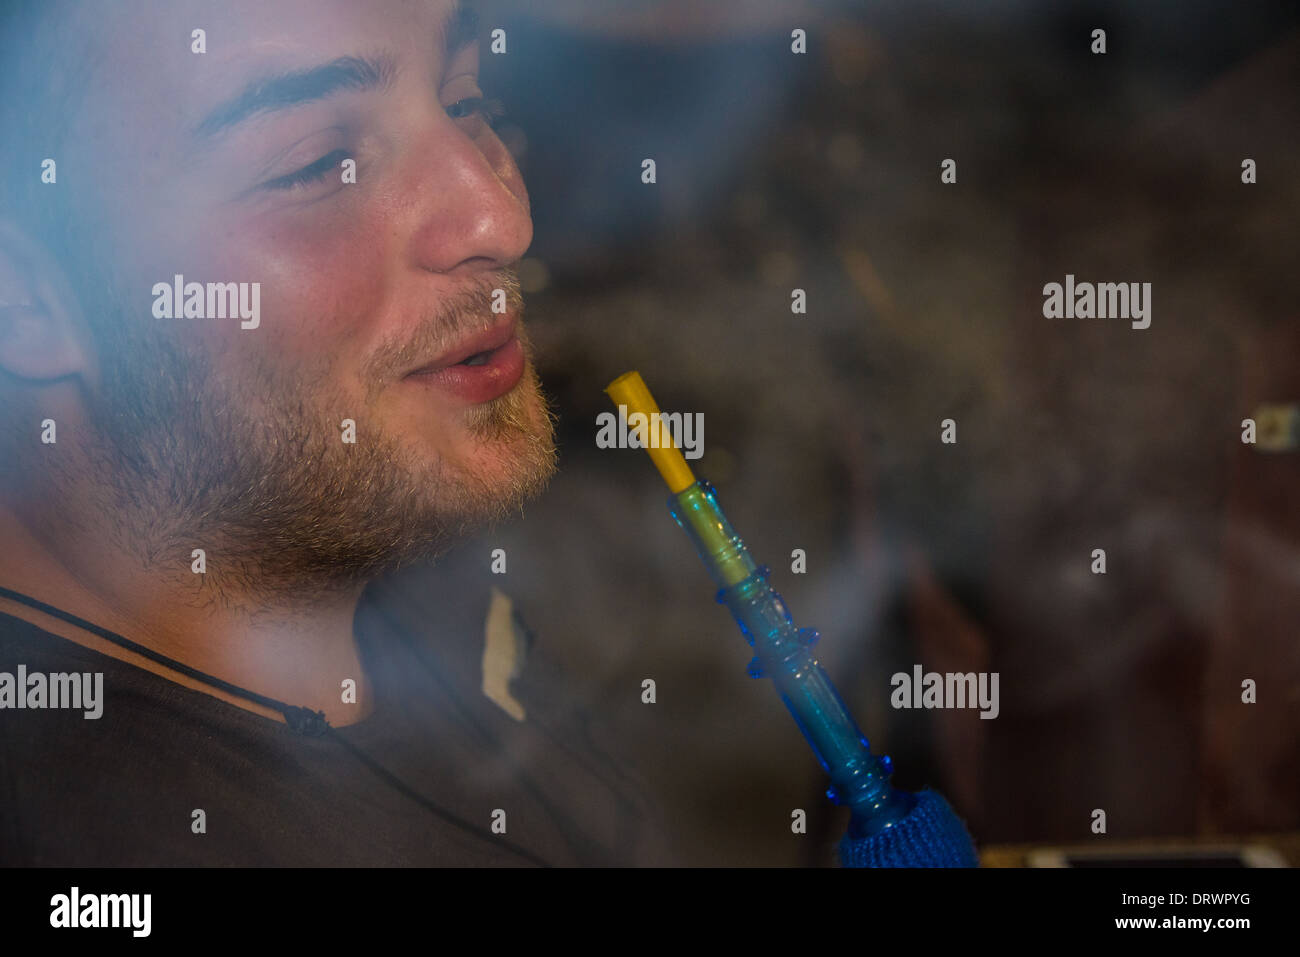 smoking a shiska young man smokes a waterpipe on a hot evening at a lebonese restaraunt, happy smiling Stock Photo